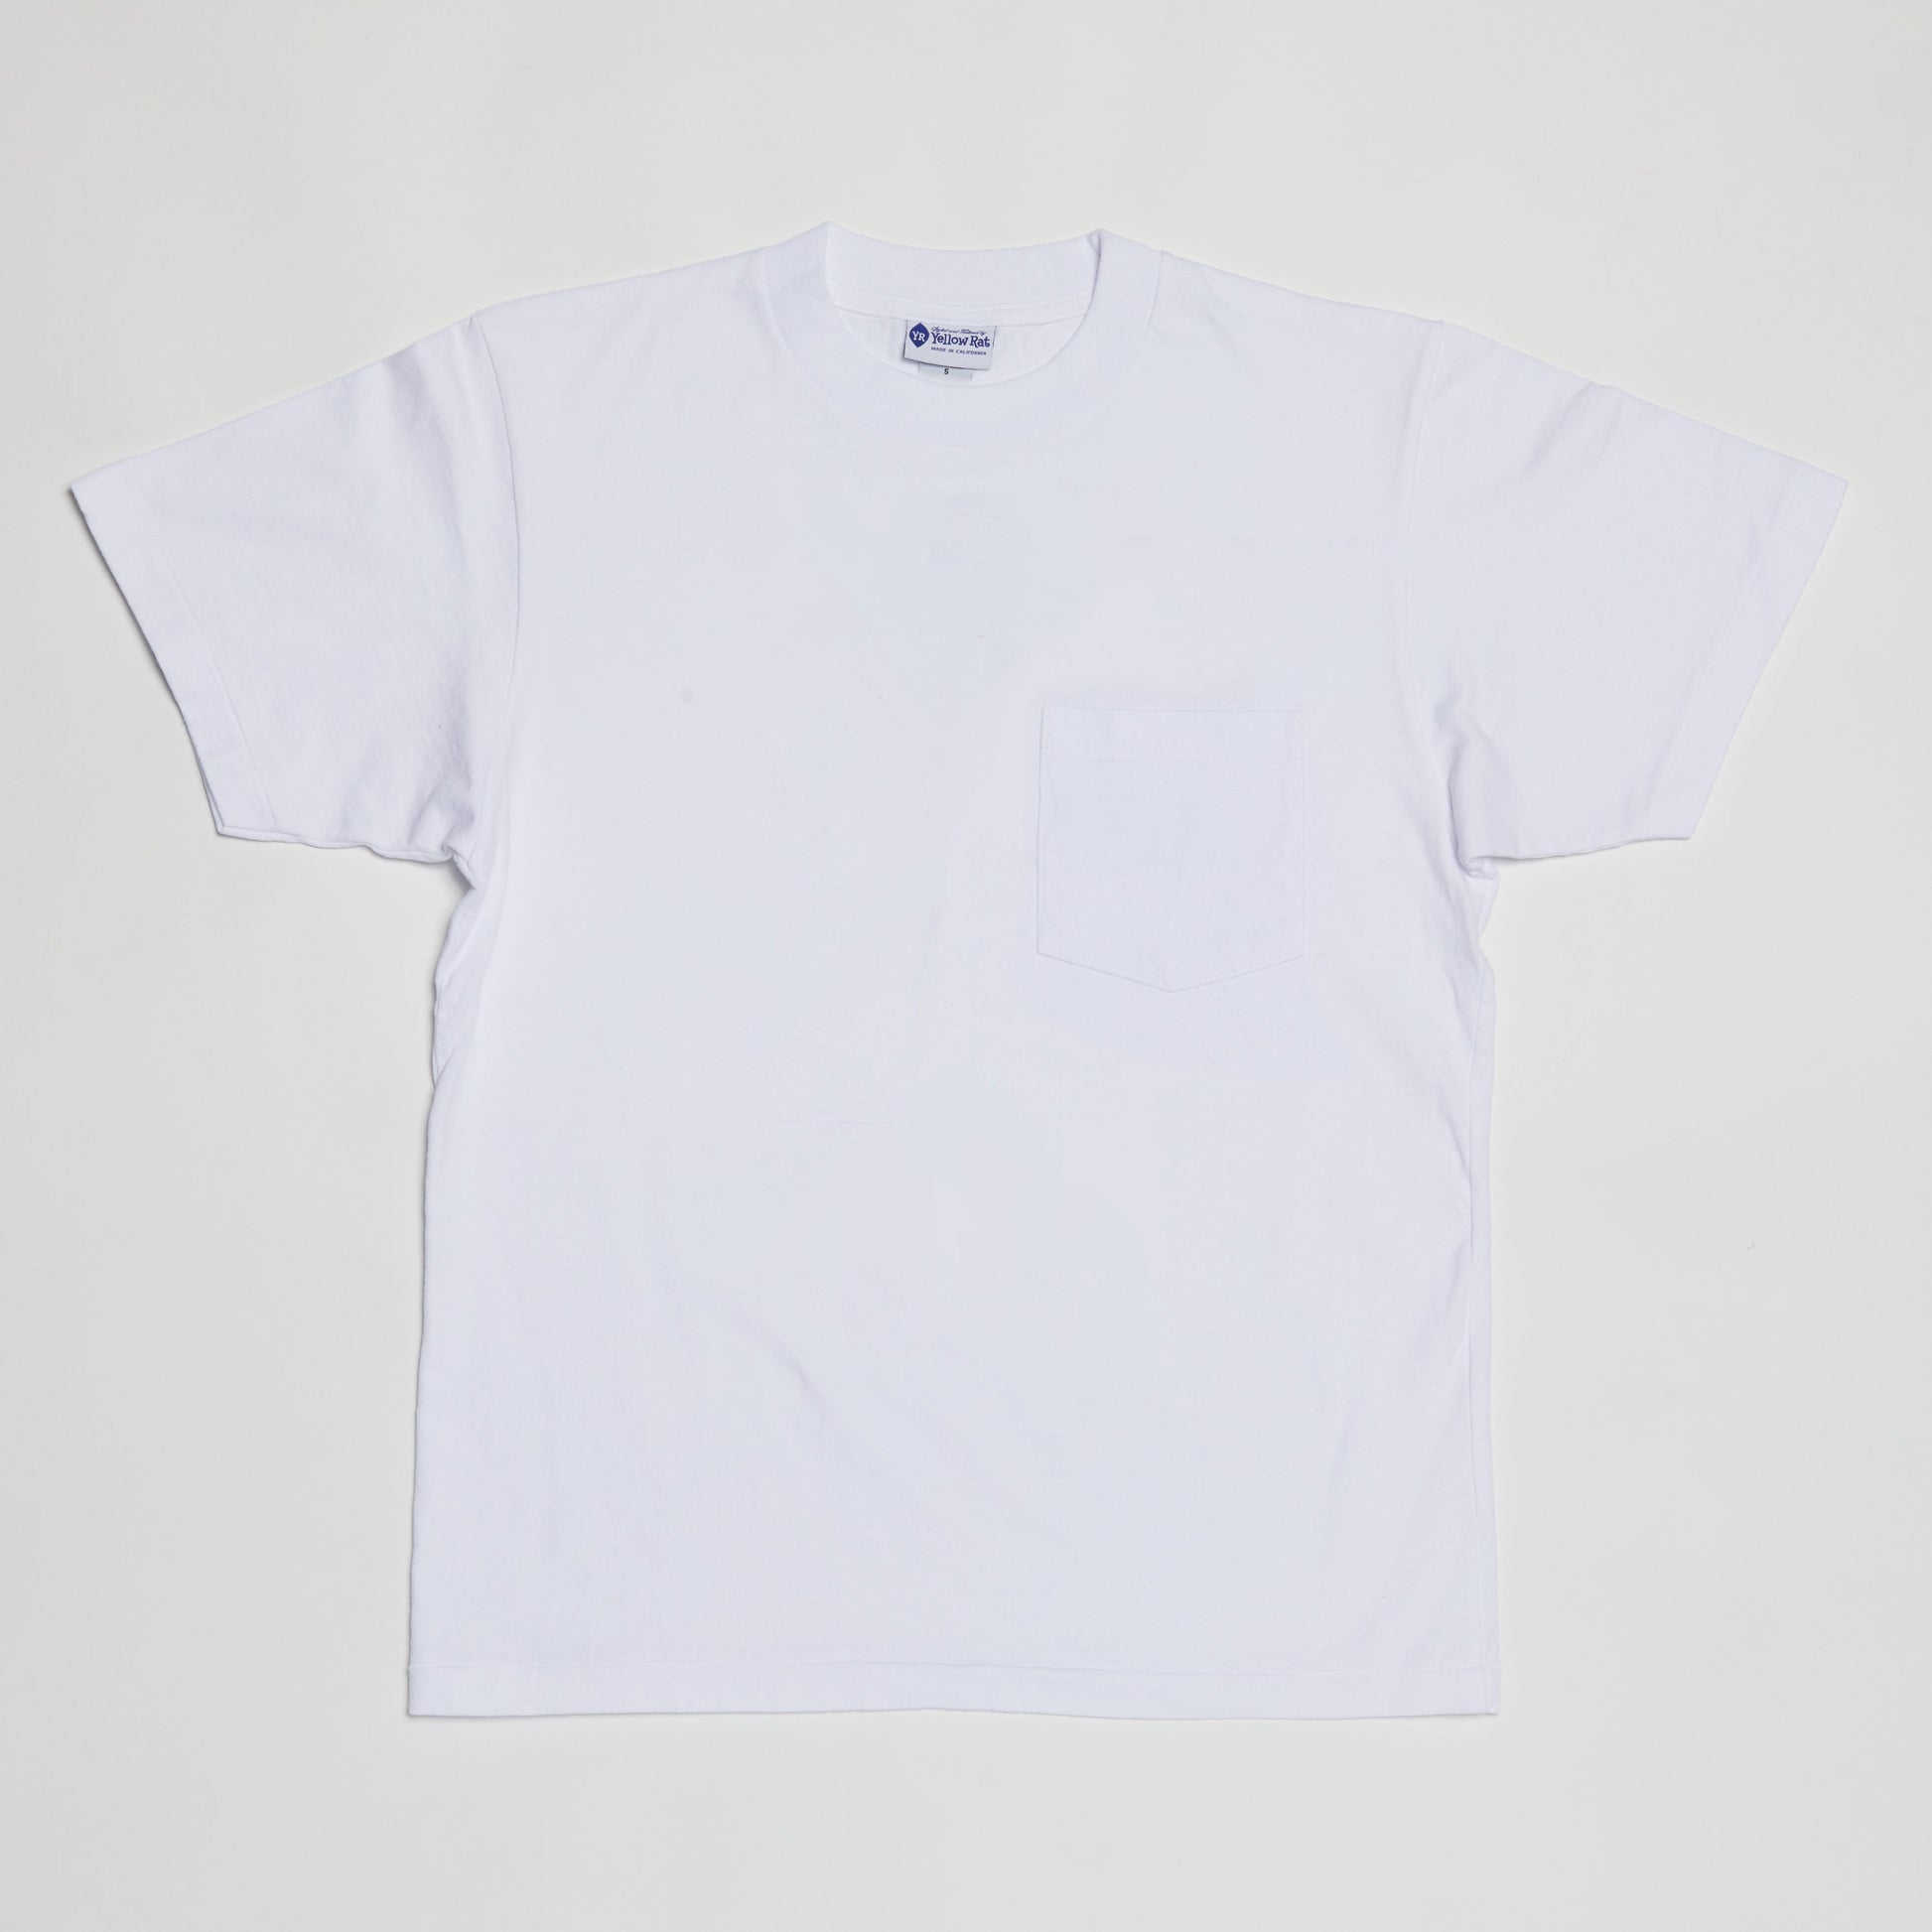 Rat IV – T-Shirt Pocket Productions Yellow (White)